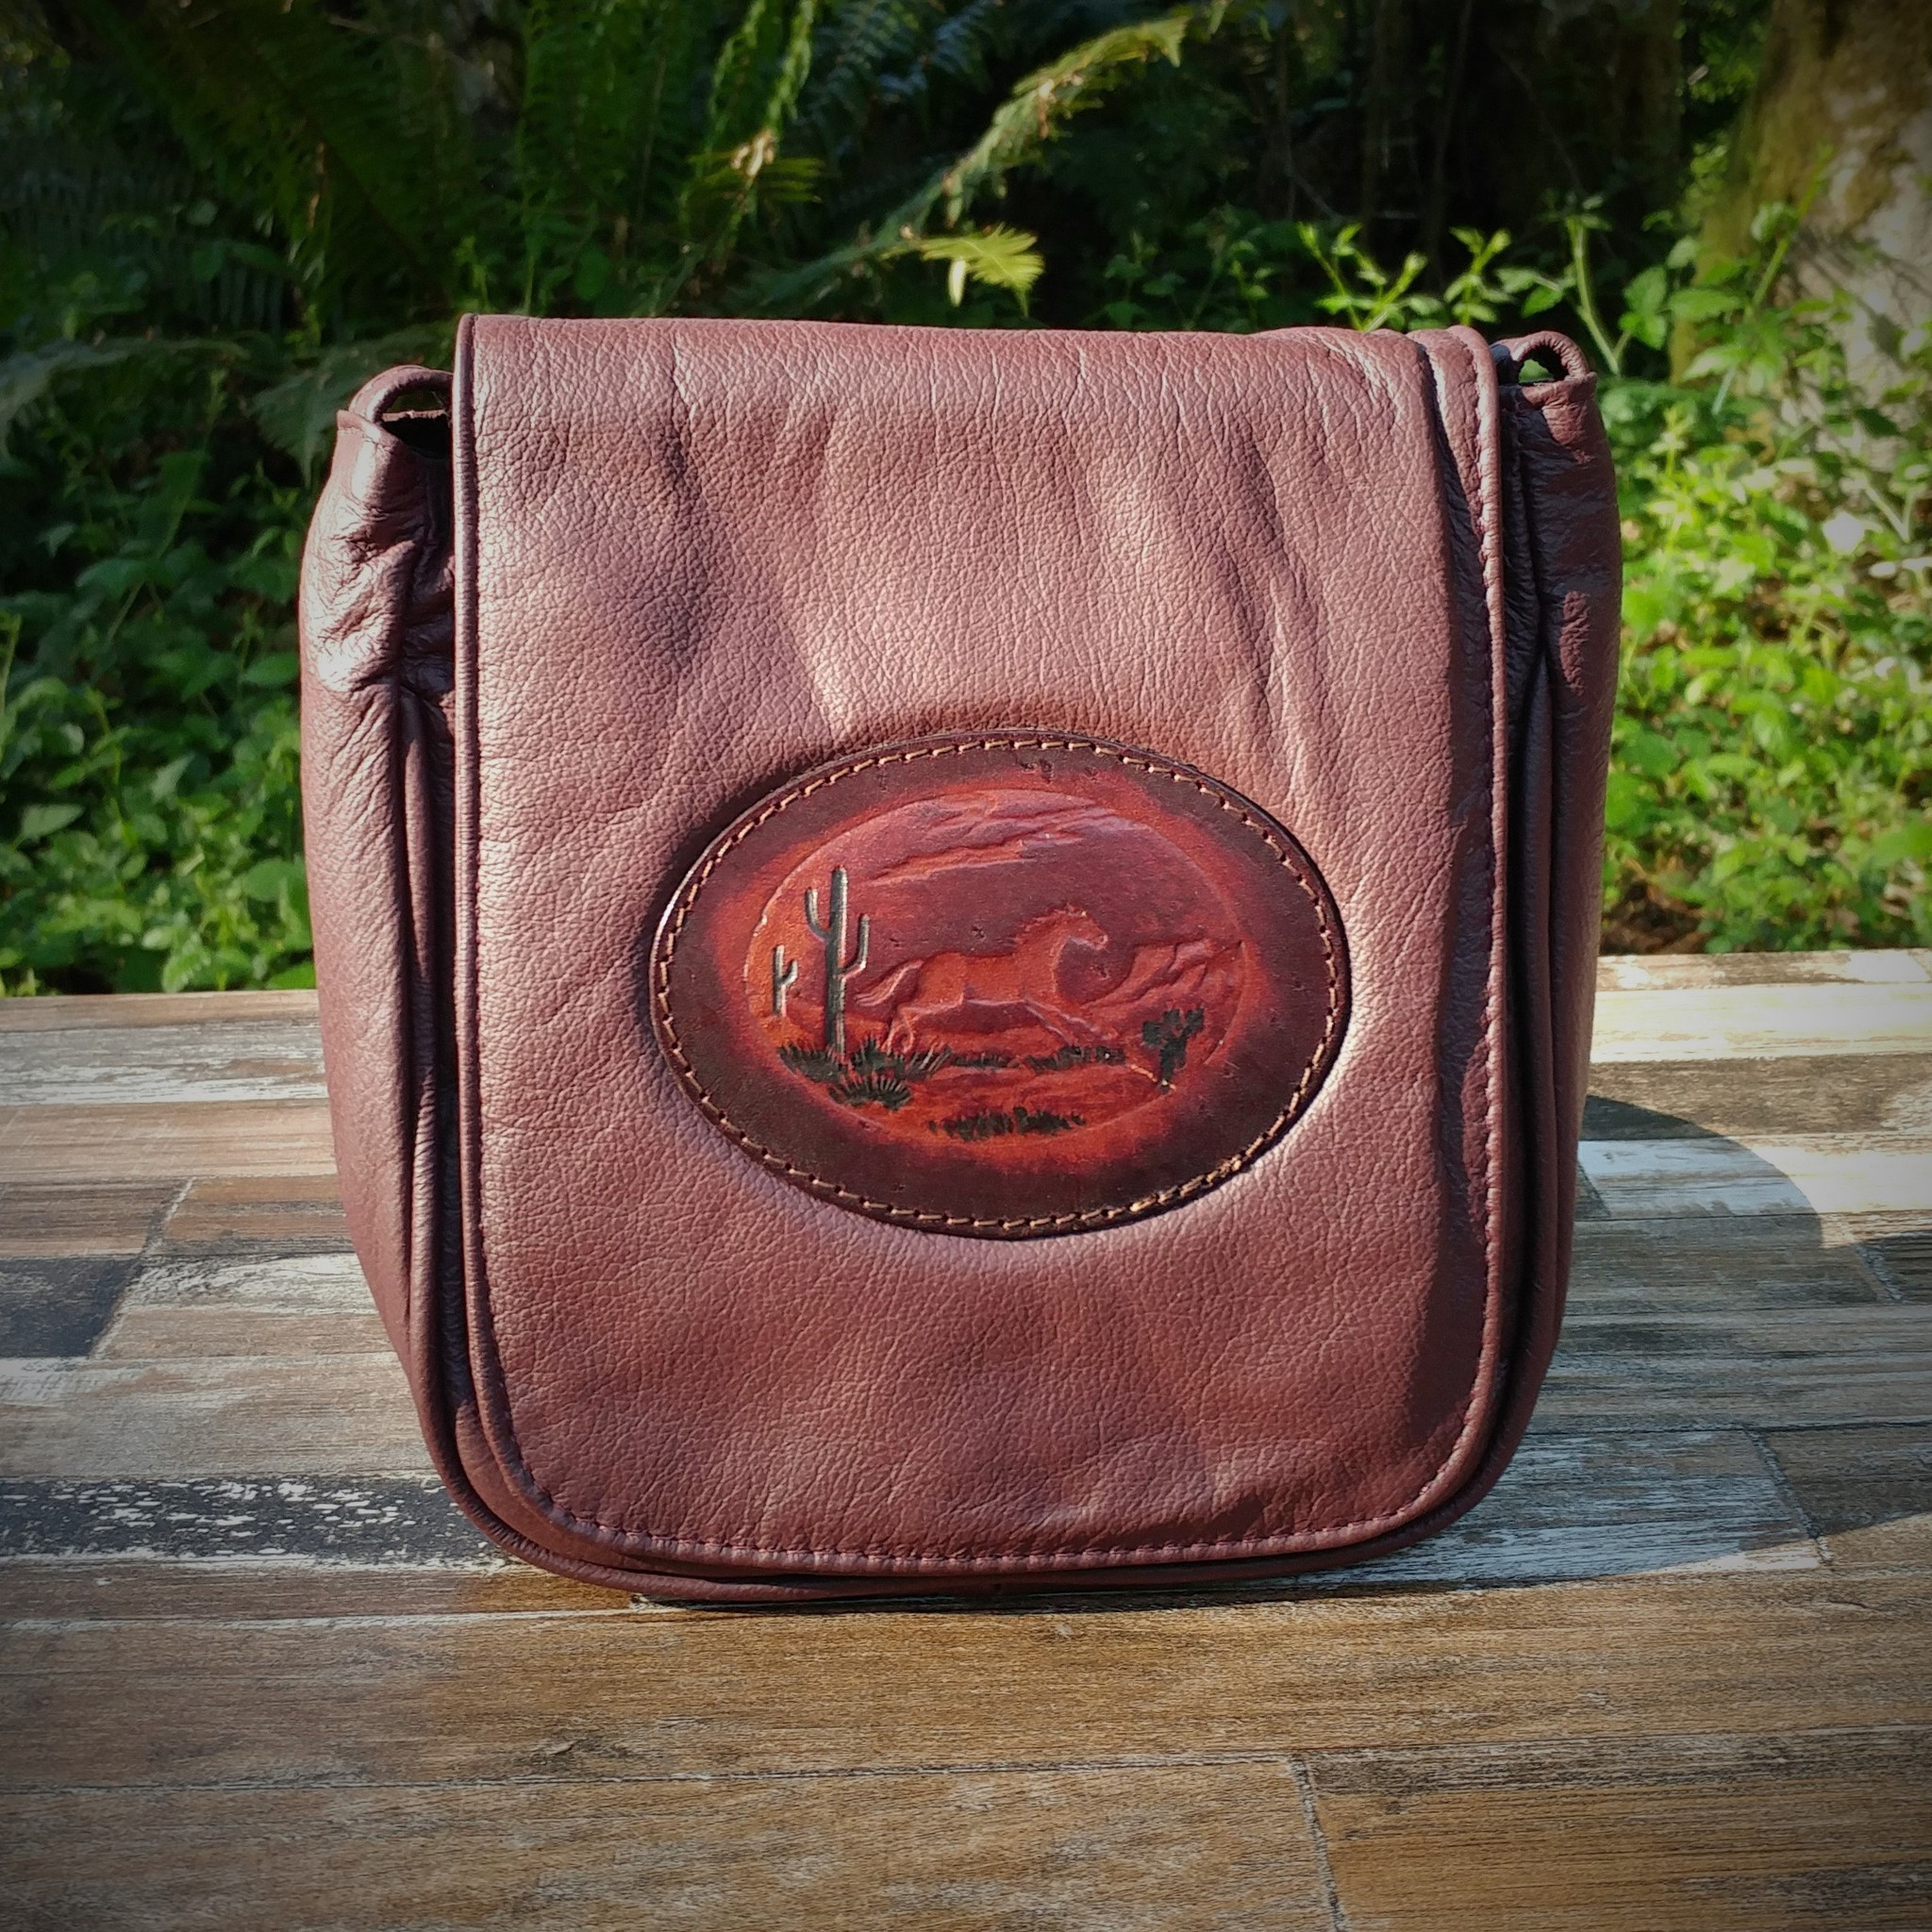 Derek Alexander Cognac Brown/Red Leather Classic Crossbody Bag Purse | eBay